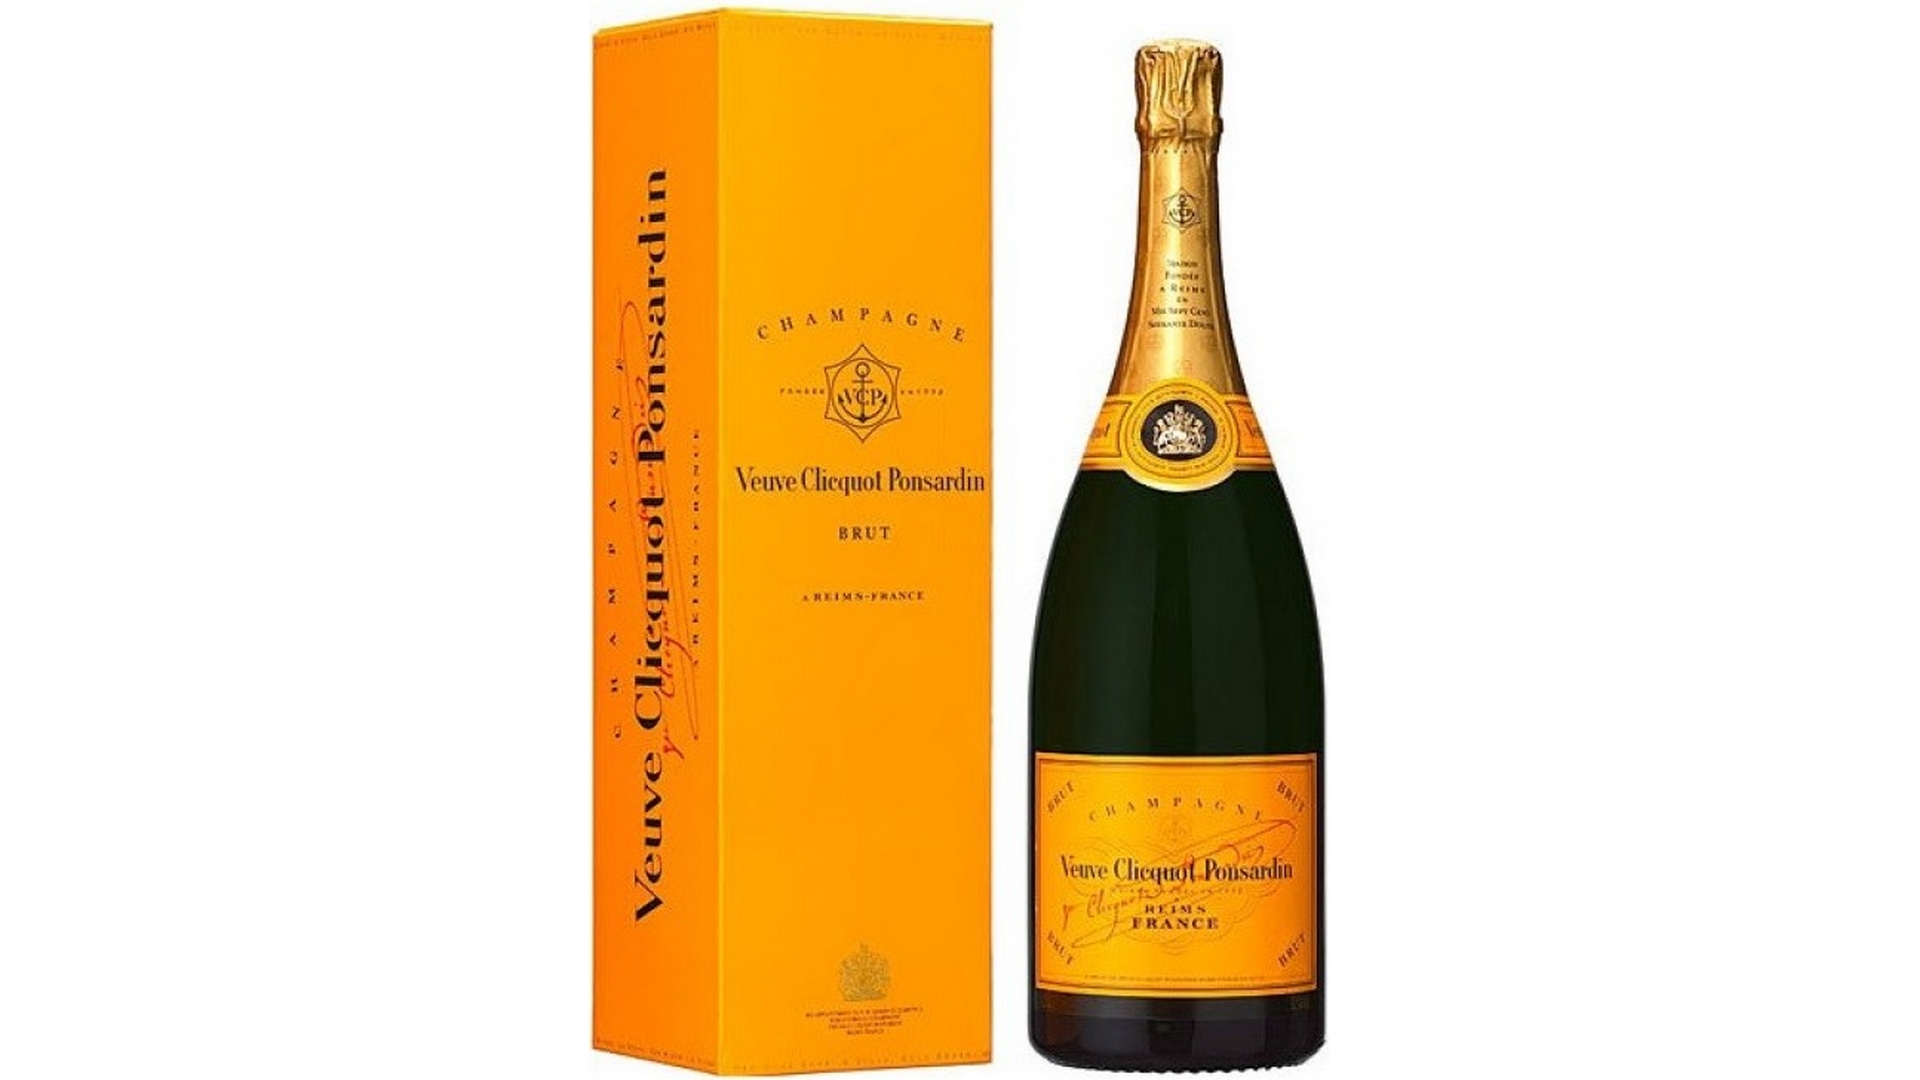 Вдова Клико шампанское. Вдова Клико Понсардин. Двова кли ко. Veuve Clicquot Ponsardin 19 века.